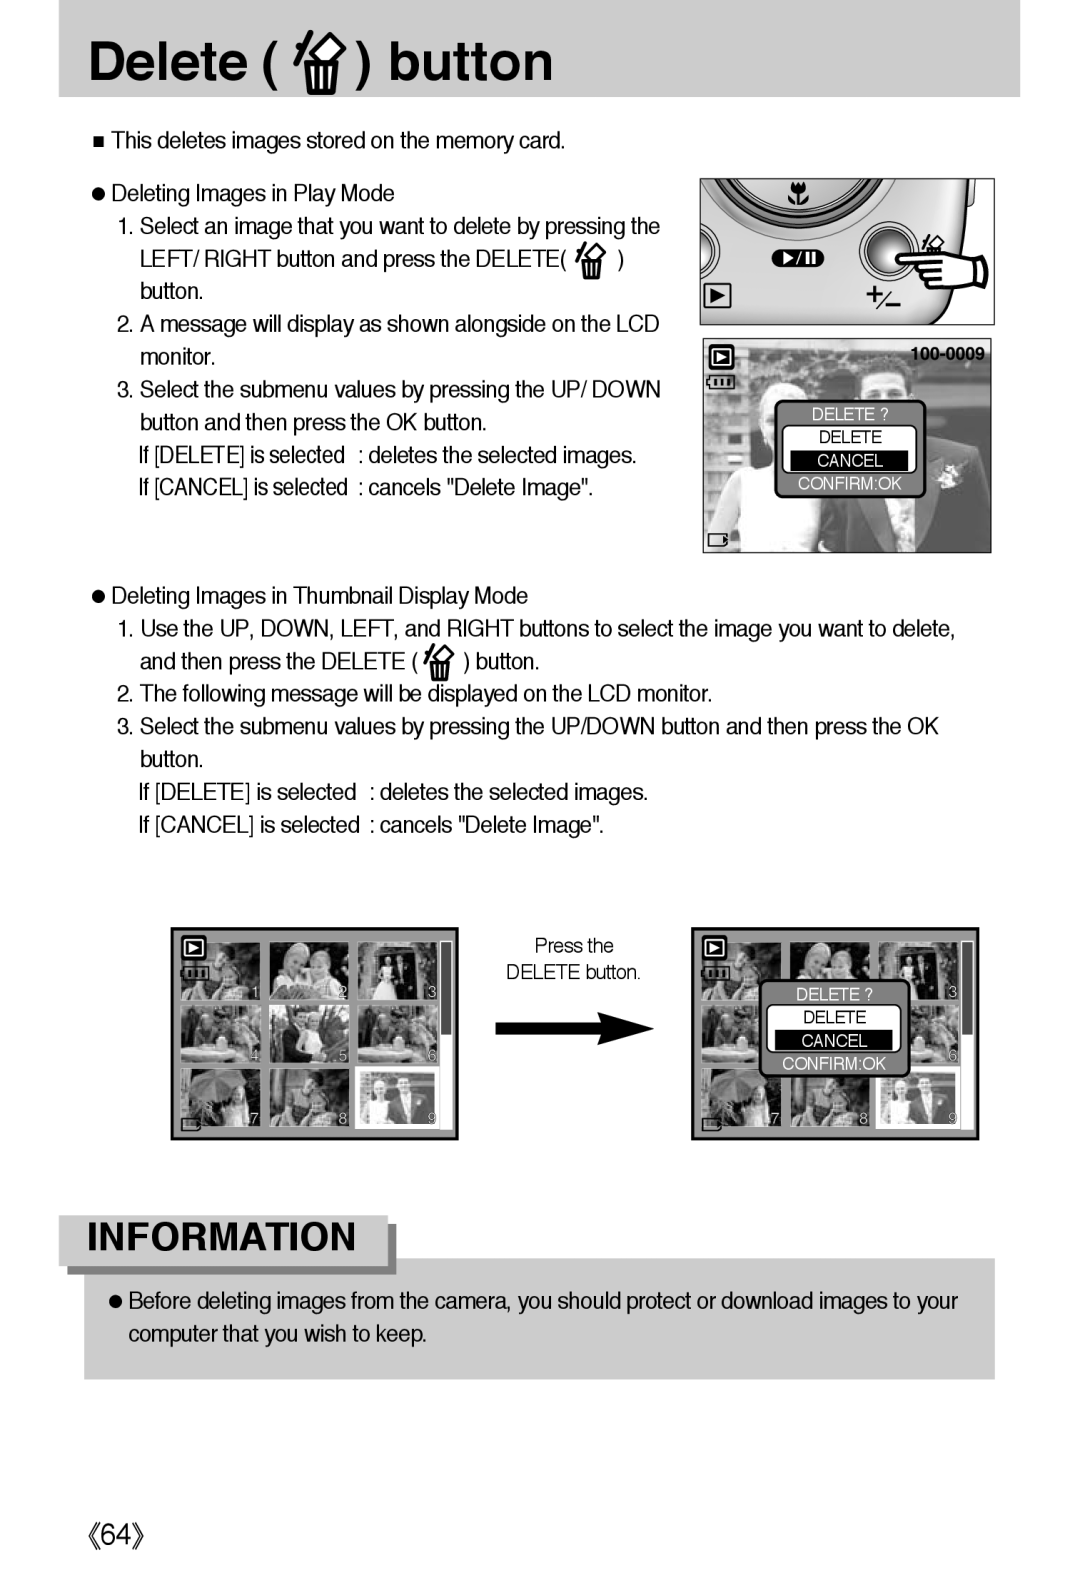 Samsung L50 user manual Delete button, 《64》, Information 